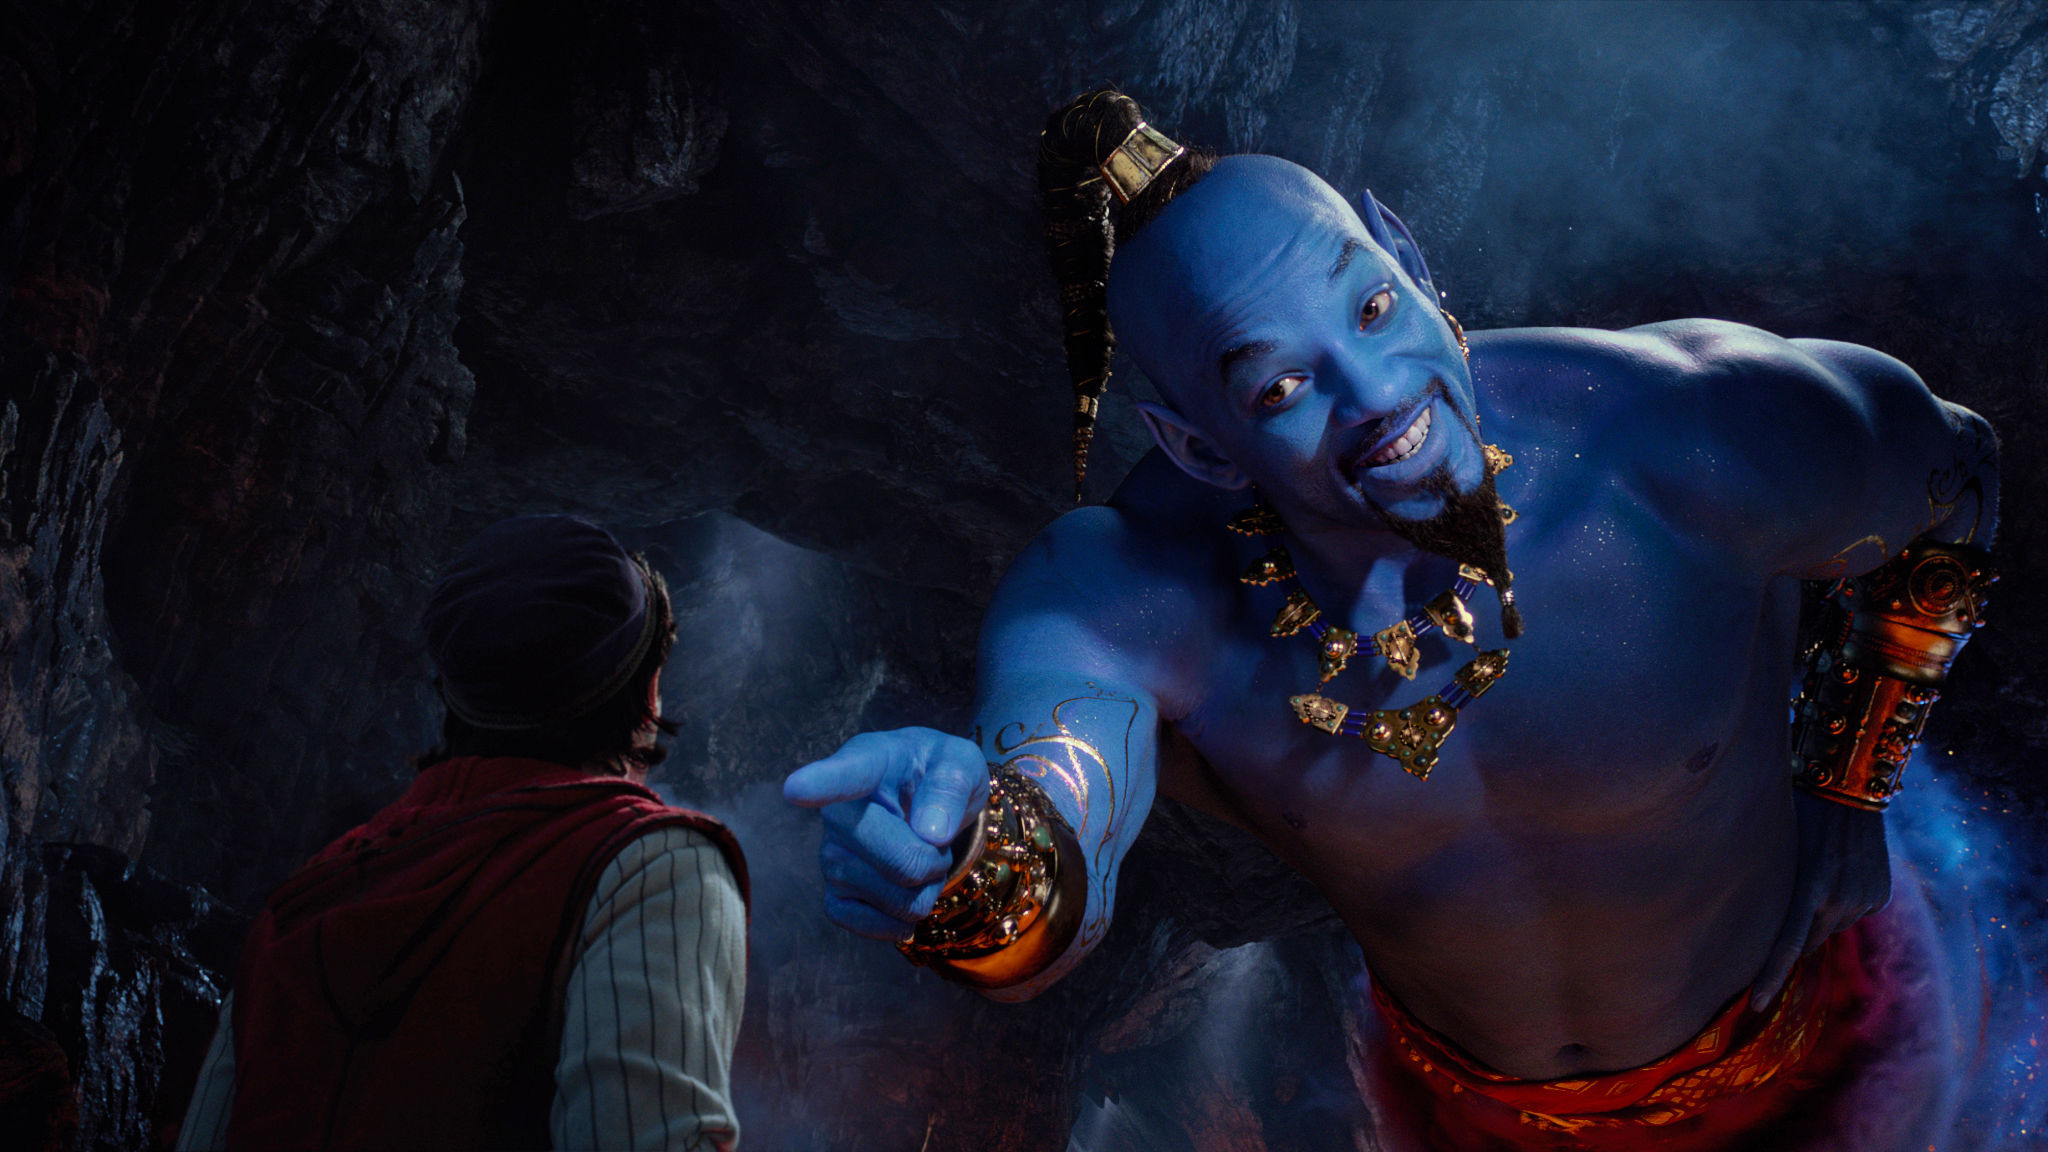 New Aladdin Trailer